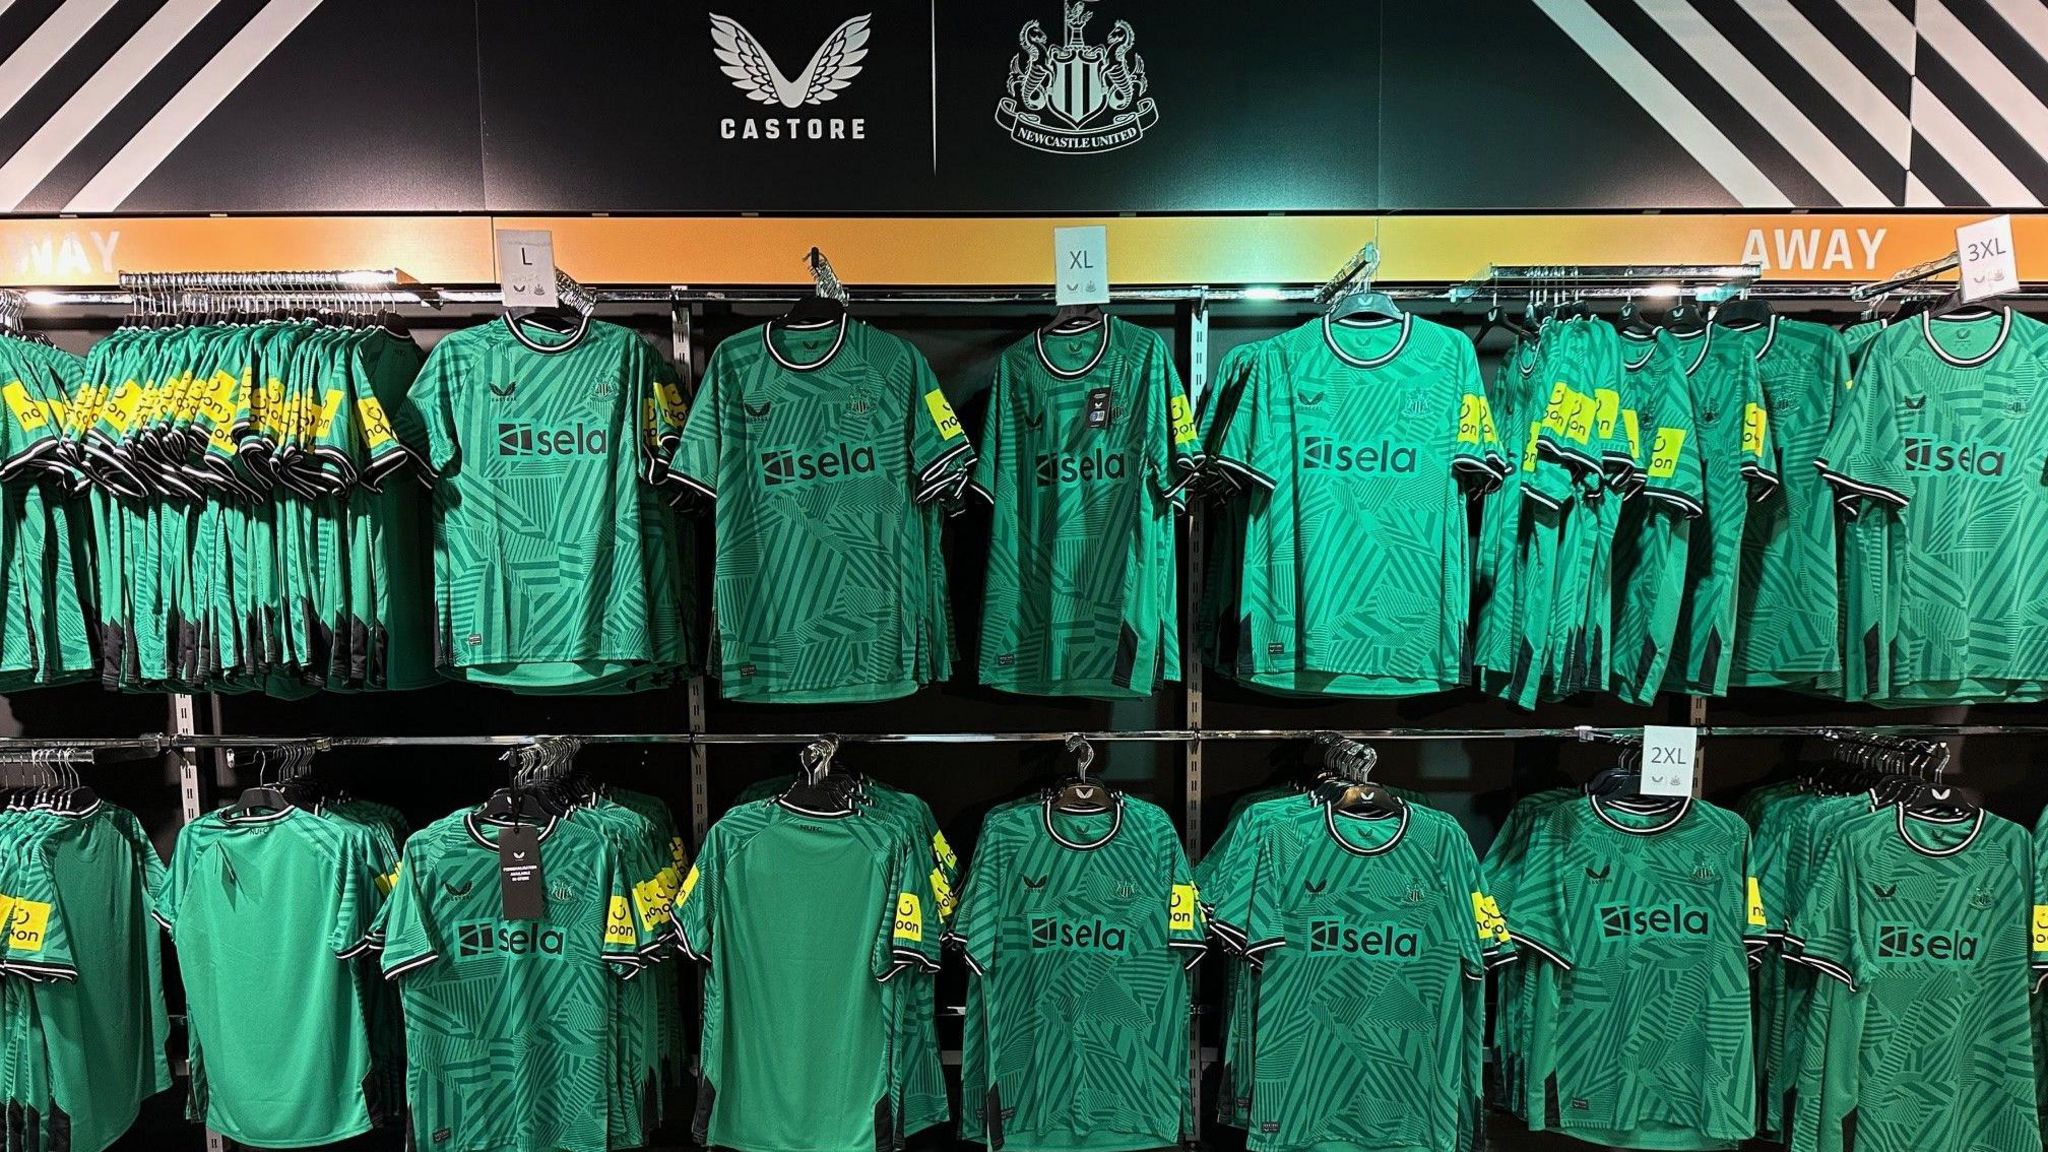 Racks of green Newcastle shirts